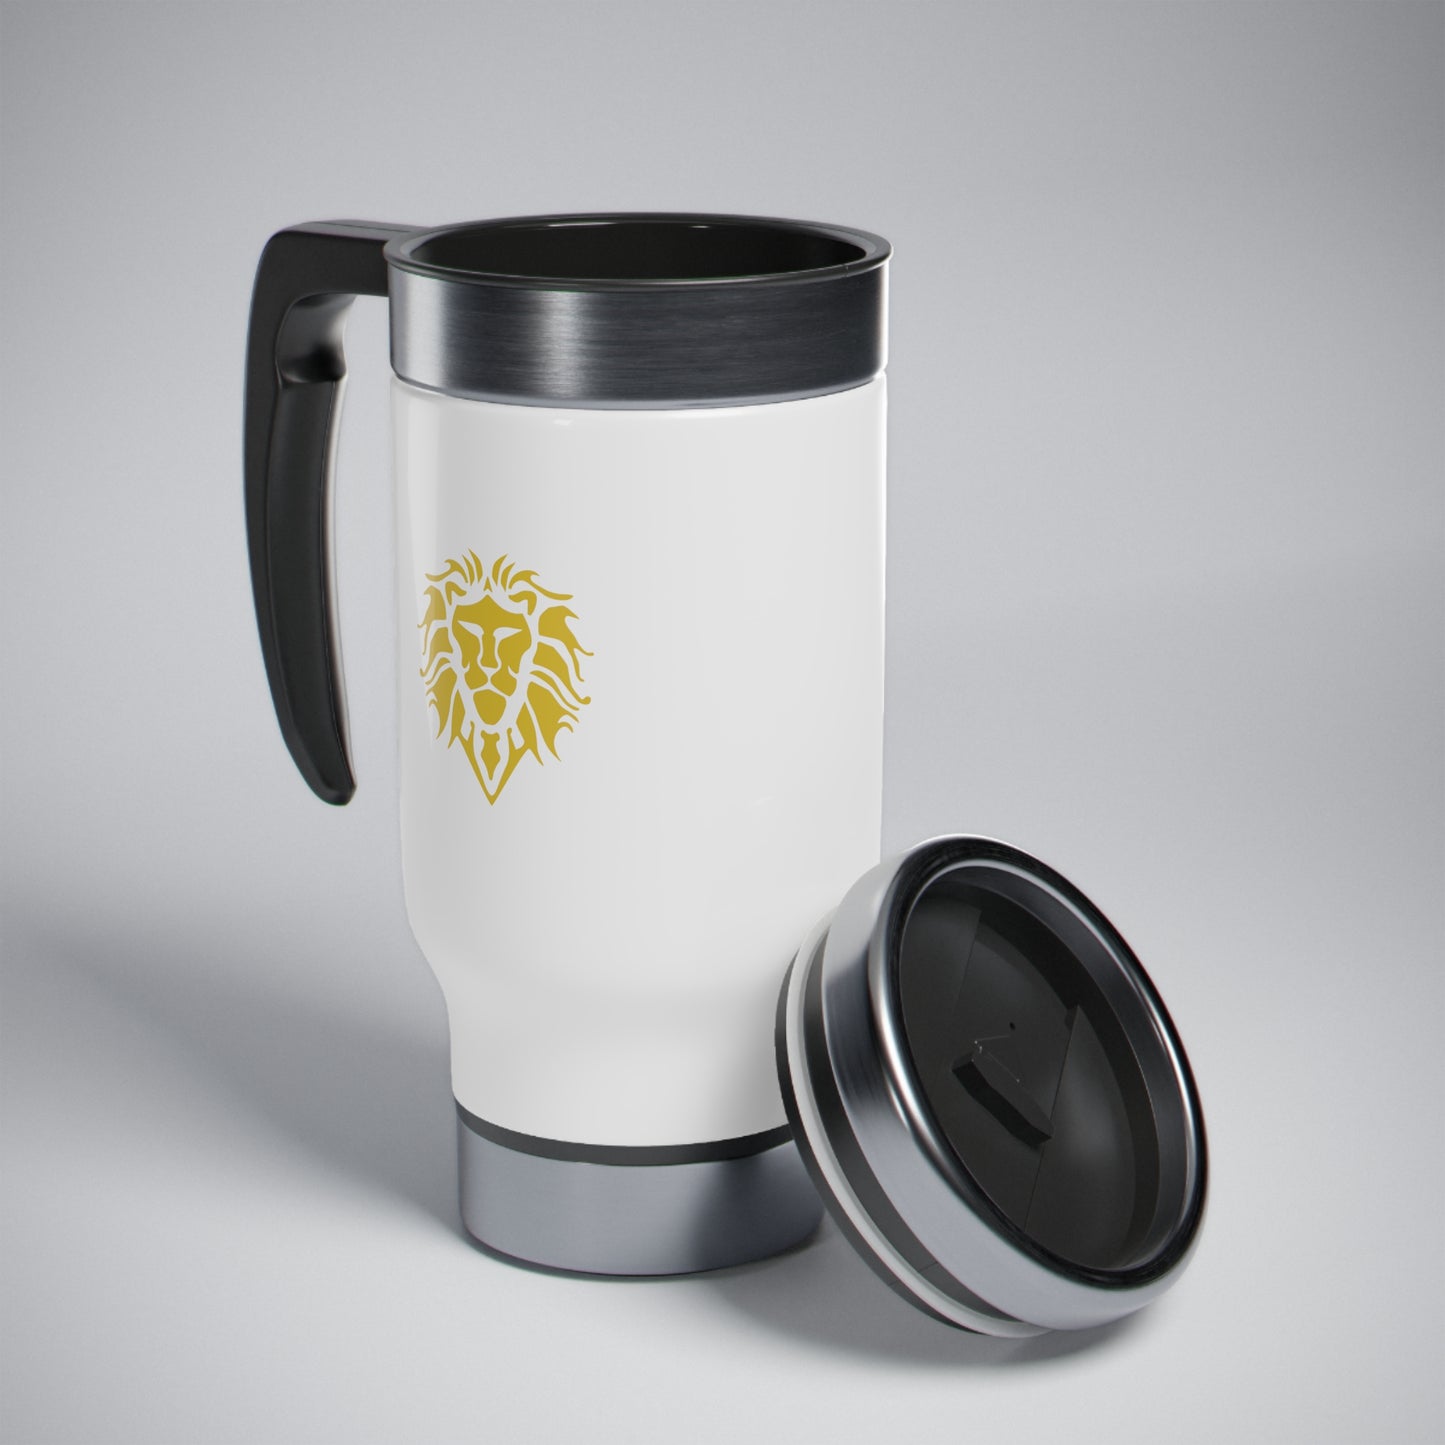 Stainless Steel Travel Mug with Handle, 14oz - Lion Logo